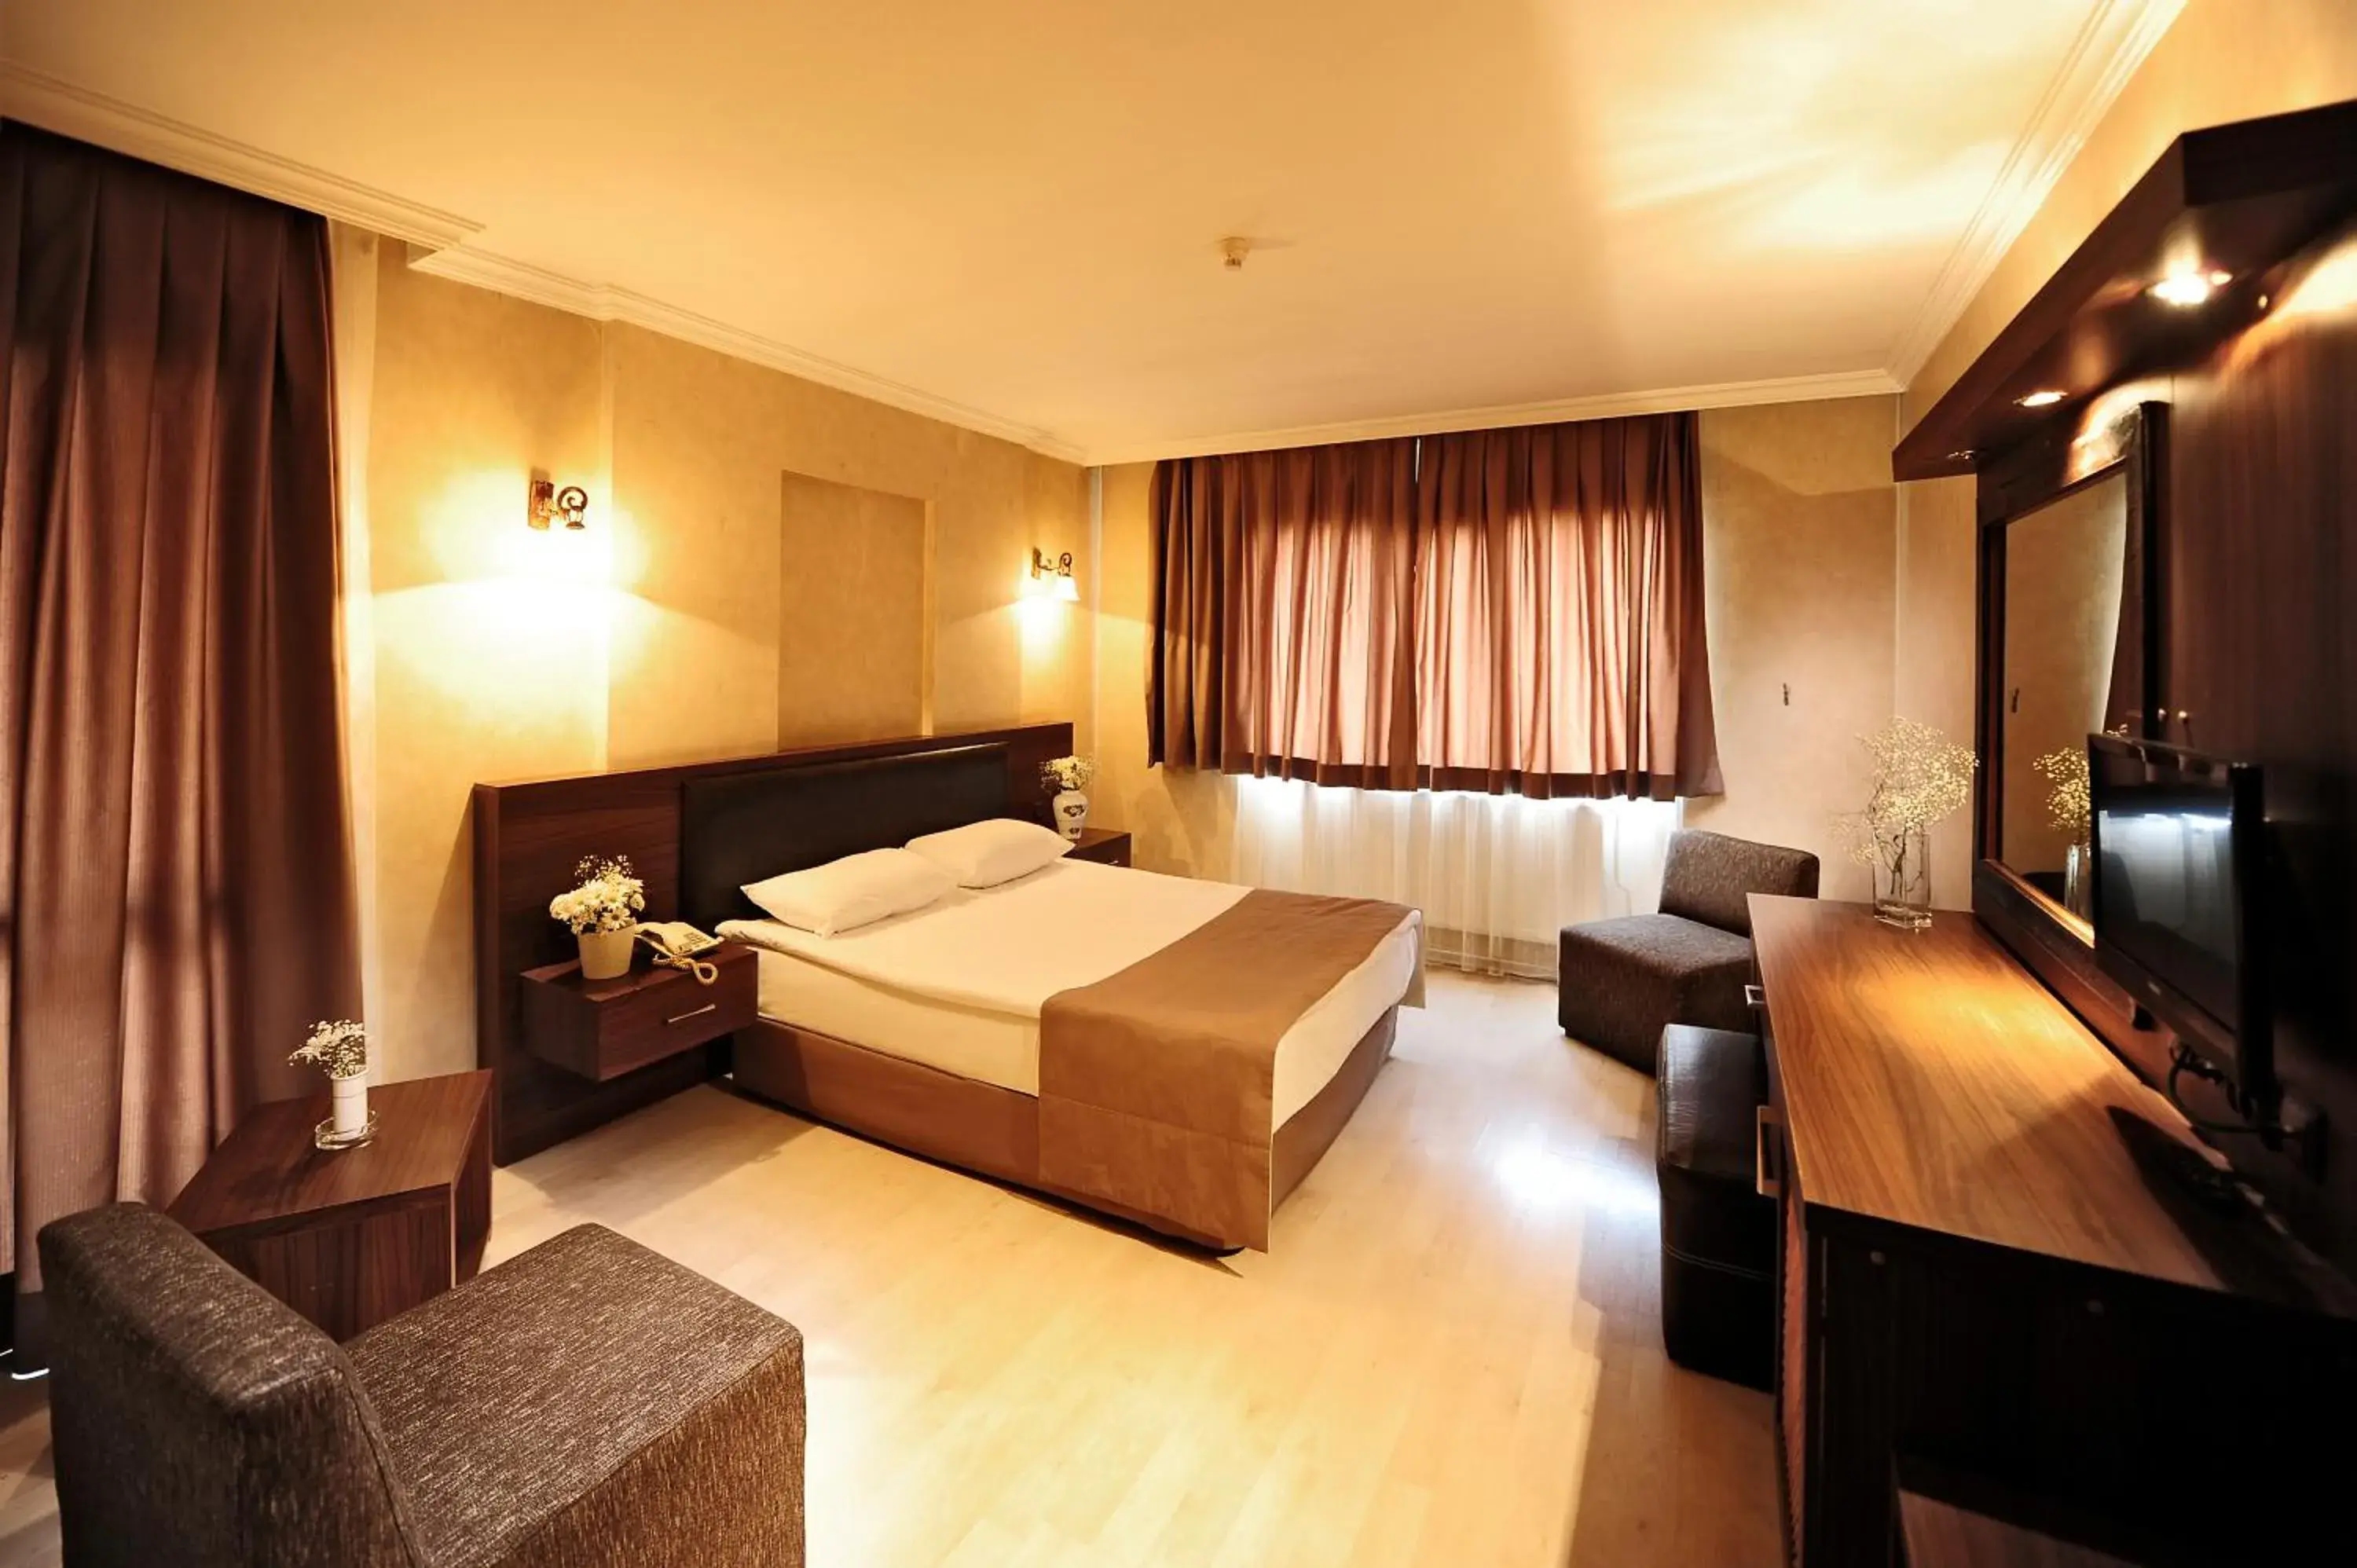 Bedroom in Ustun Hotel Alsancak